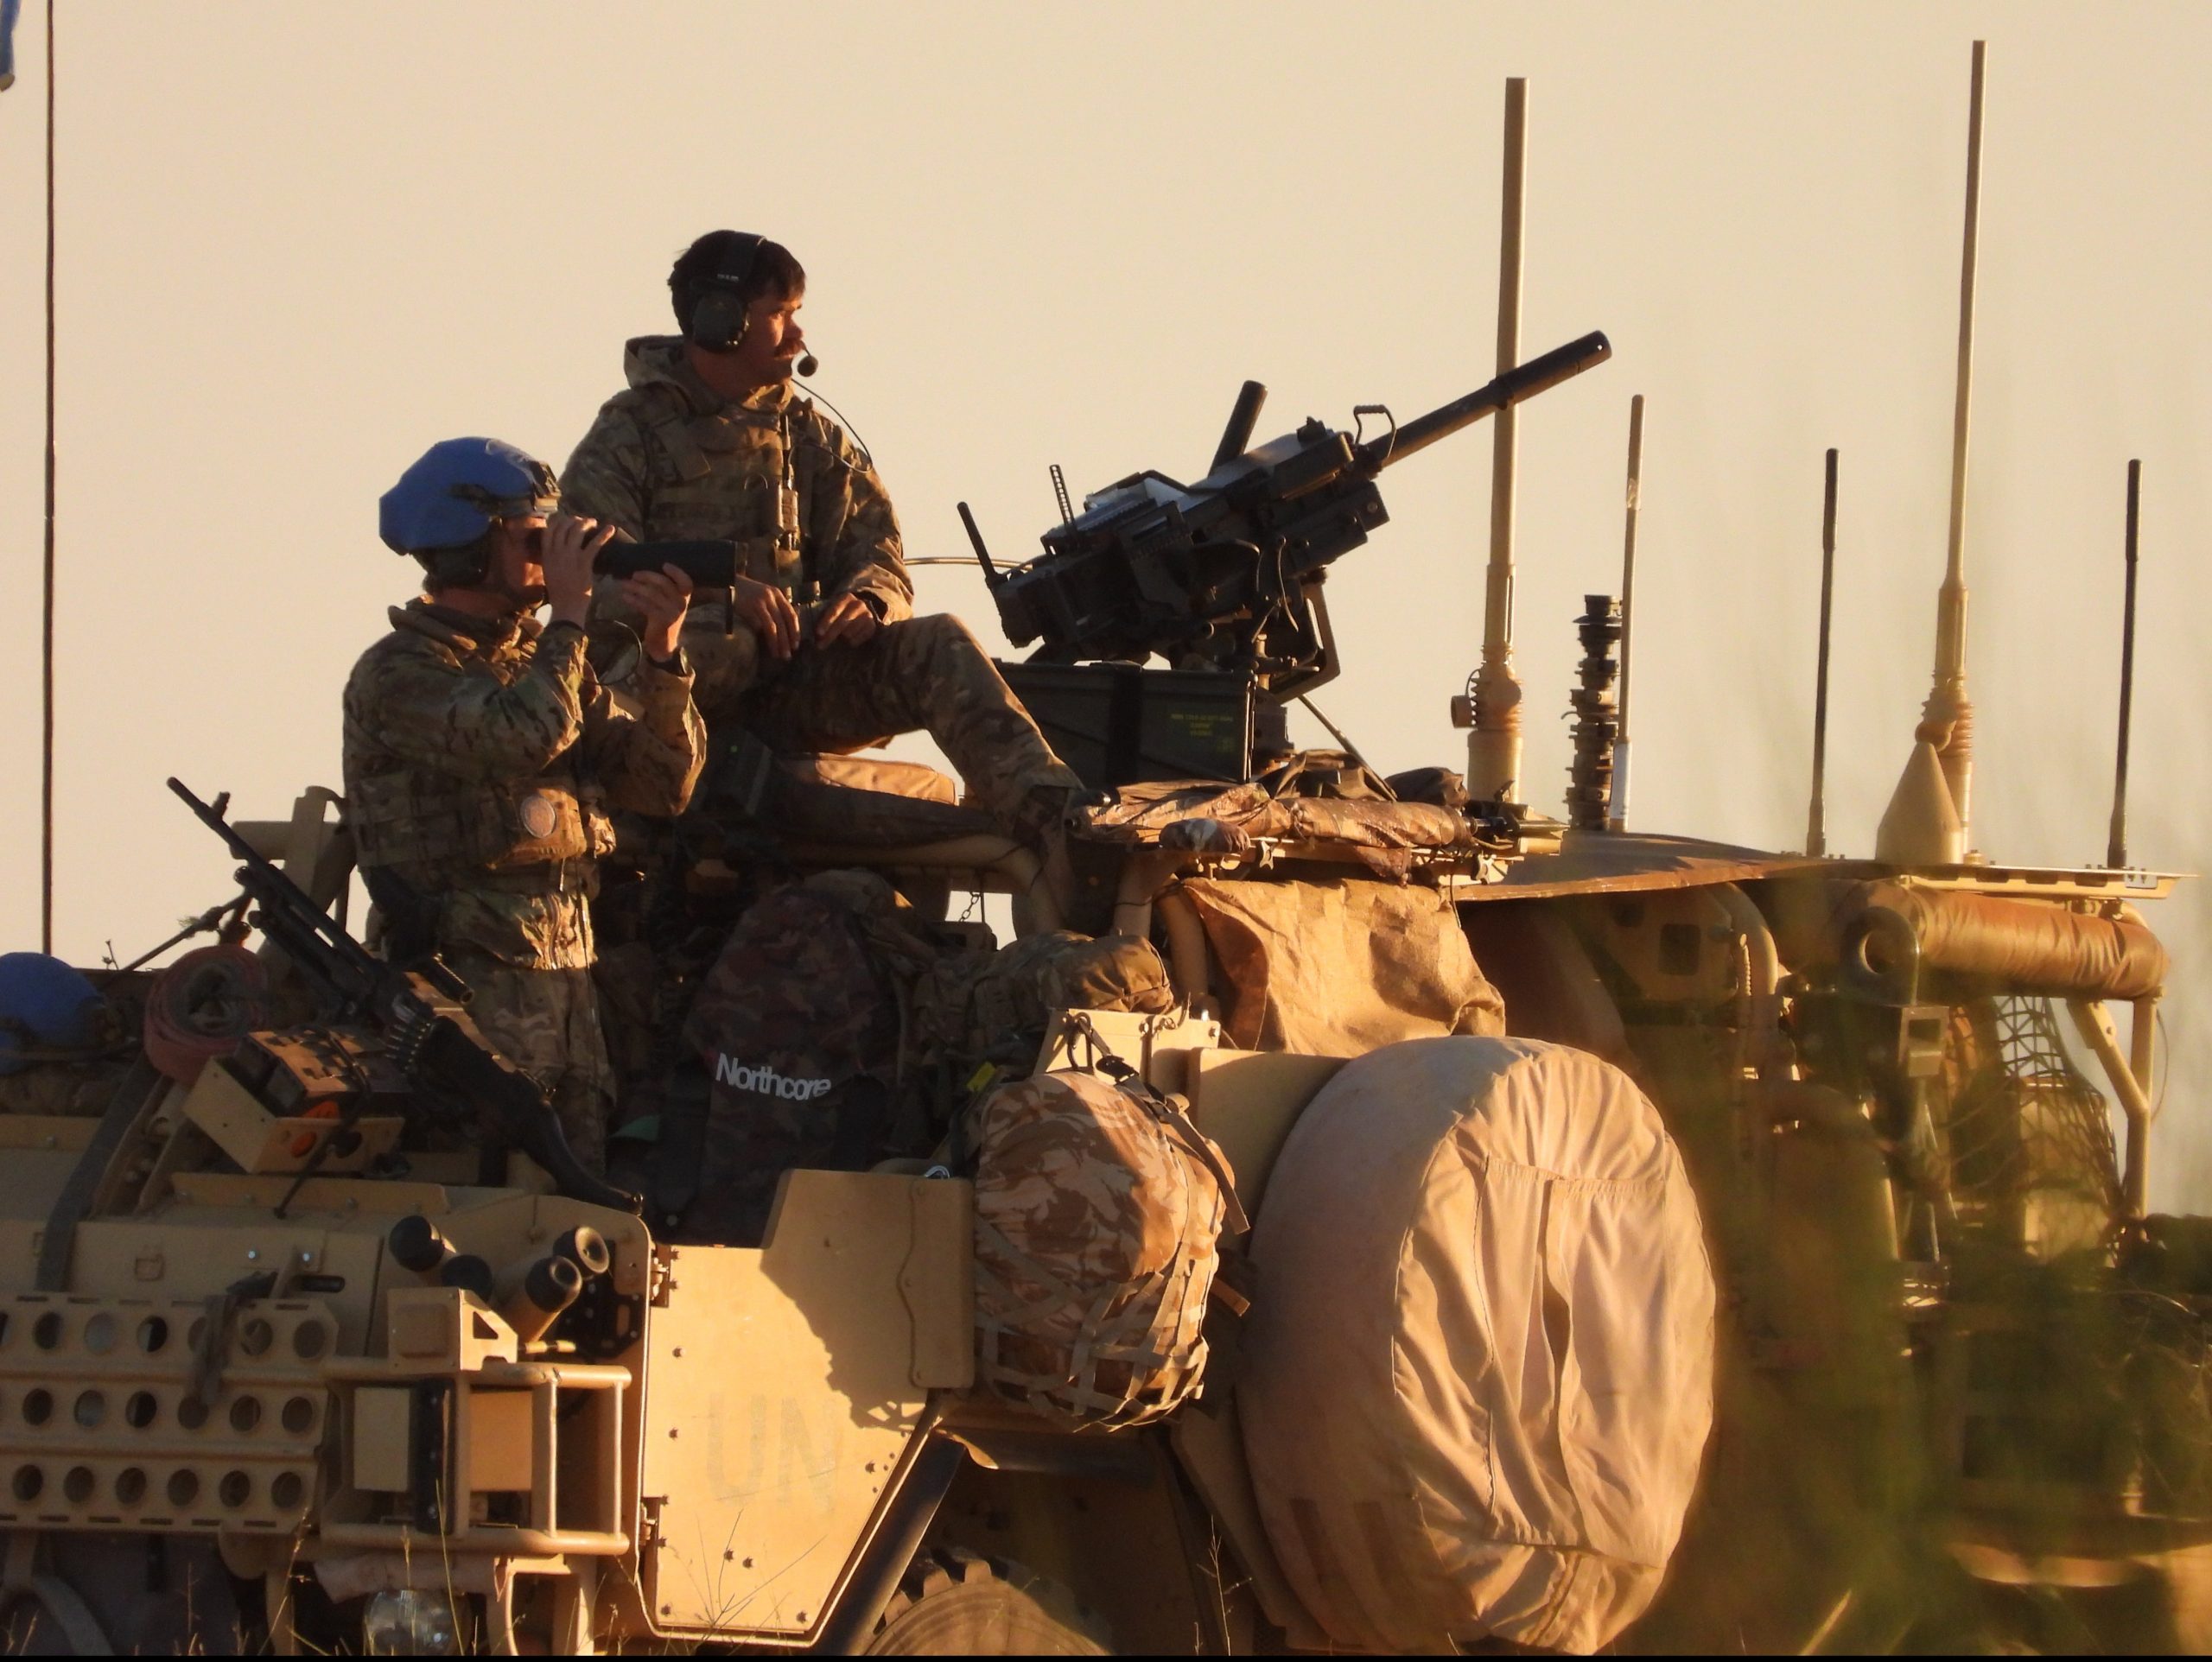 British troops begin missions in Mali amid Islamist insurgency